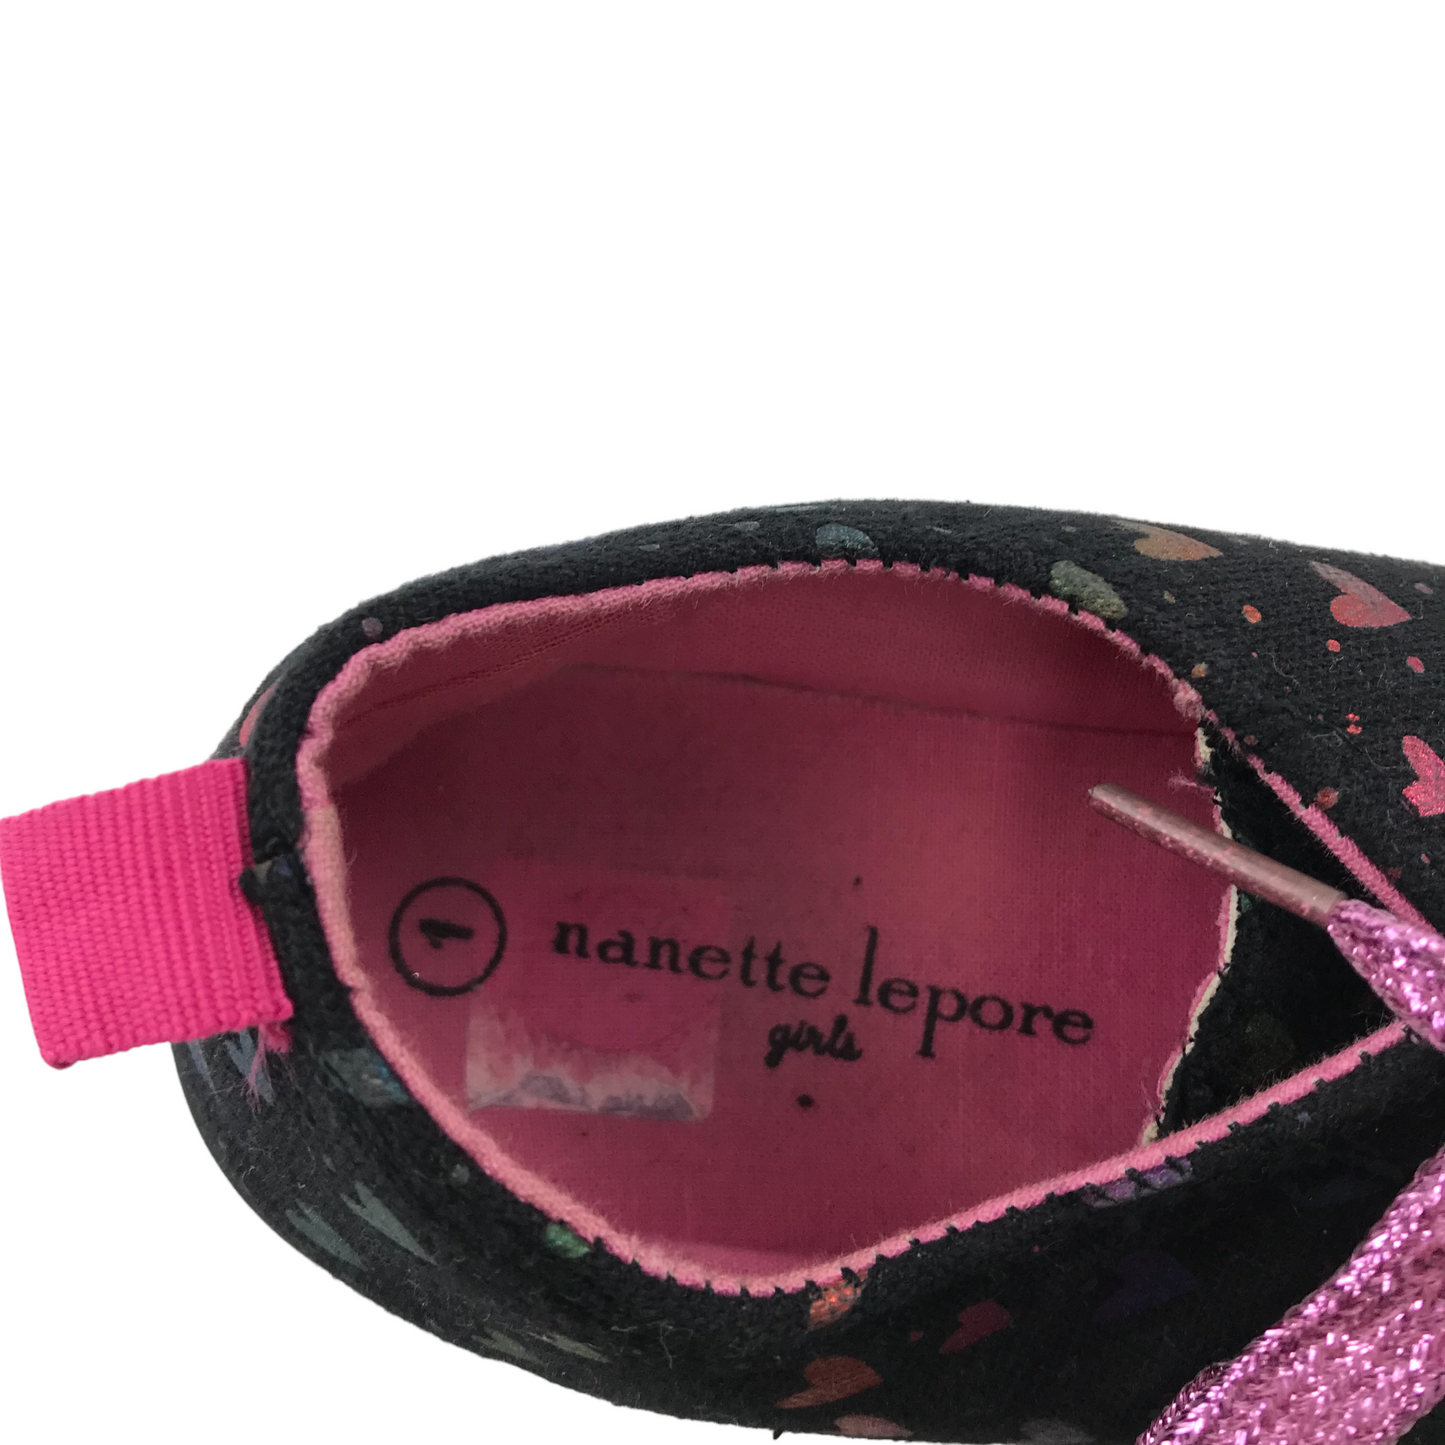 Nanette Lepore Trainers Size 1 Black Multicoloured Heart Print